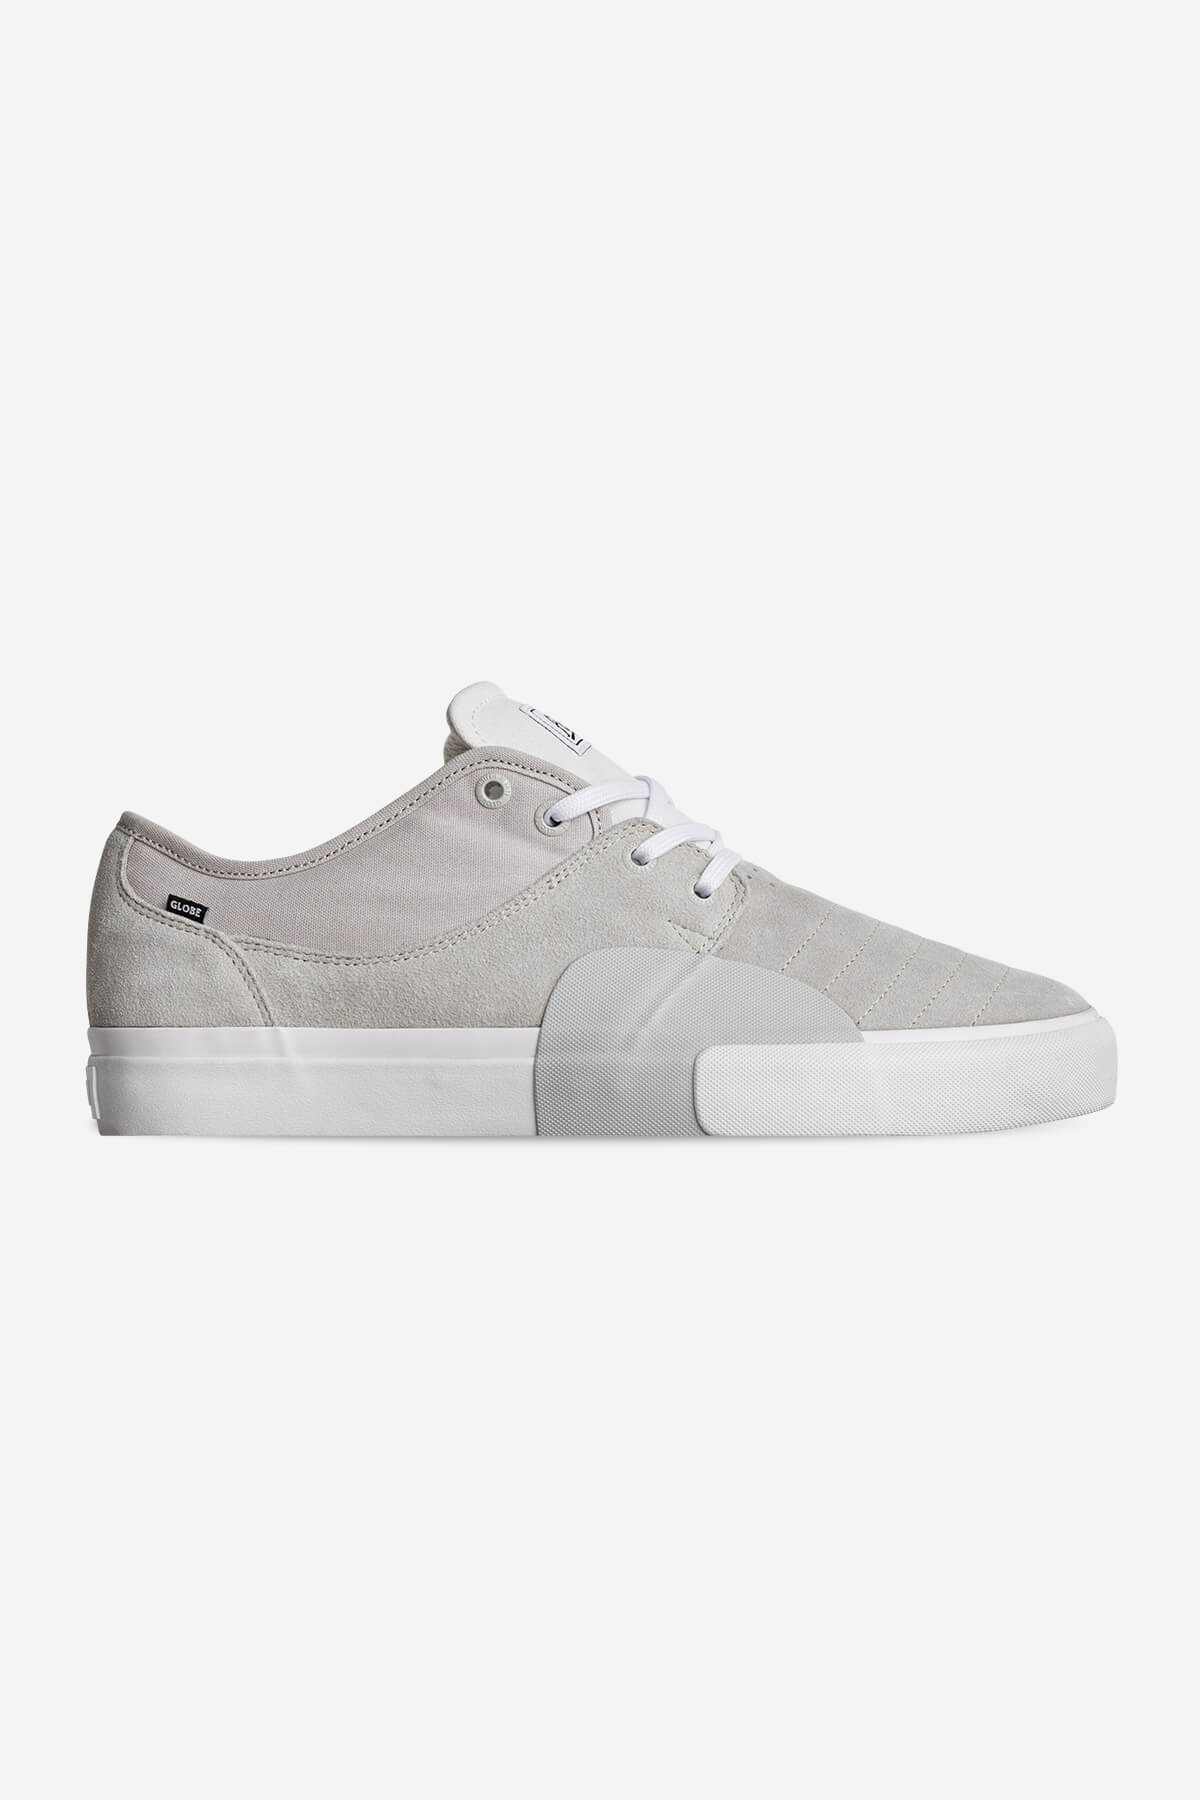 mahalo plus gris white skateboard  chaussures